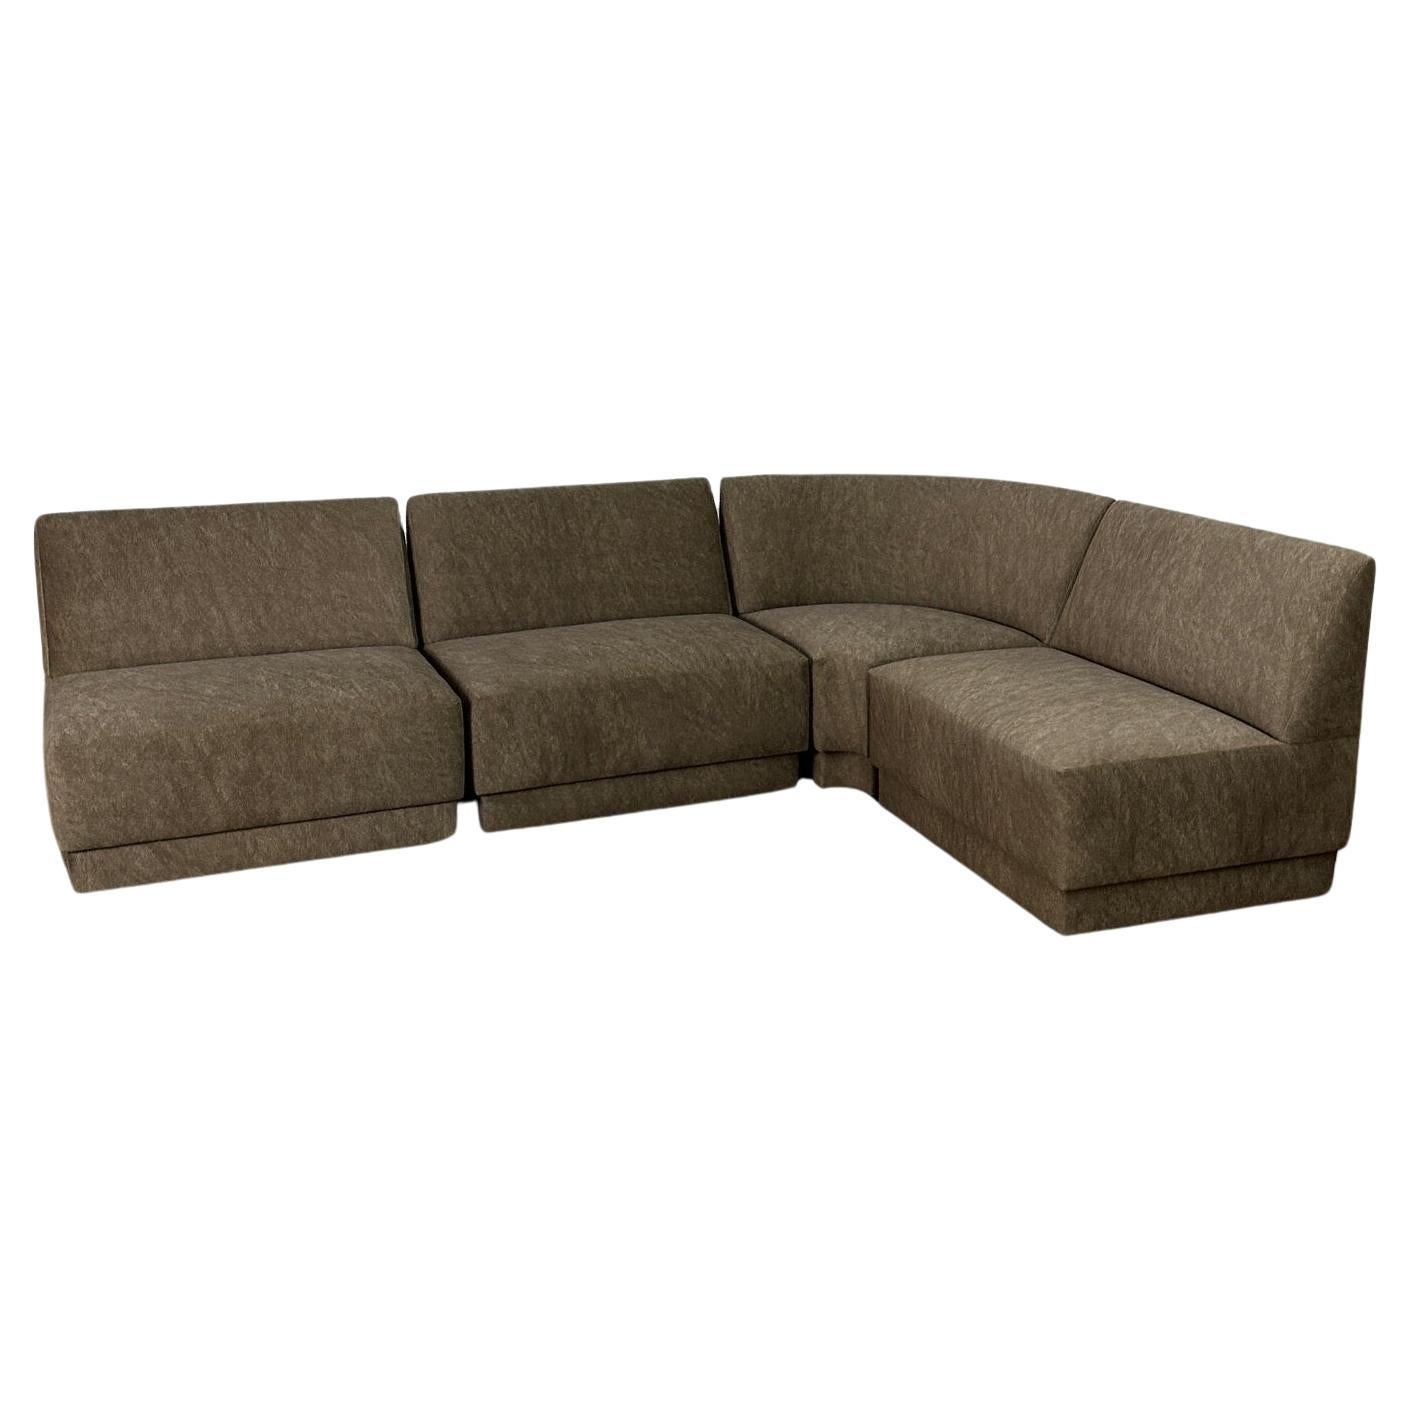 Modular Banquette sofa For Sale